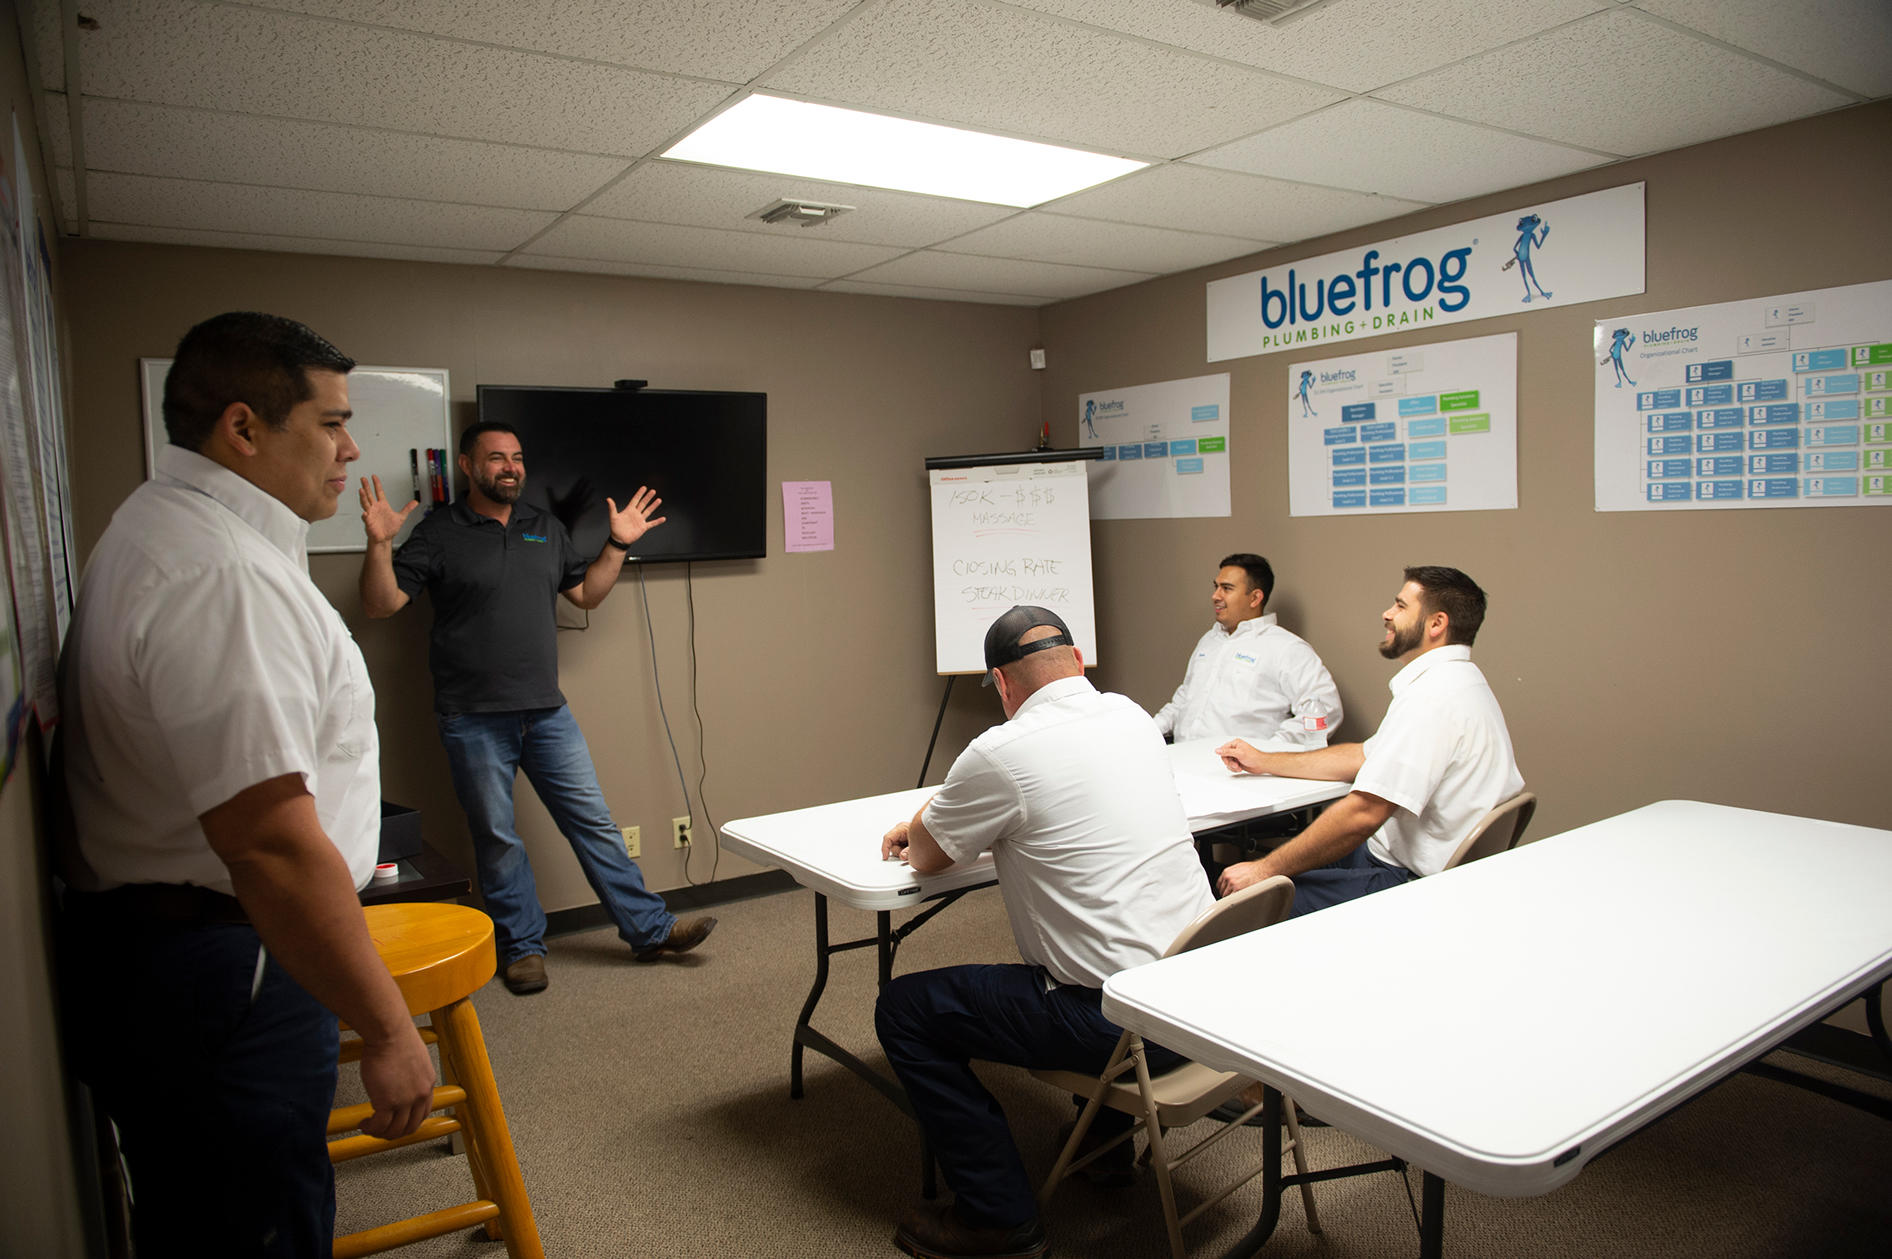 bluefrog Plumbing + Drain techs training and preparing for plumbing repair, installation, and maintenance calls in the Timberlane, LA area.